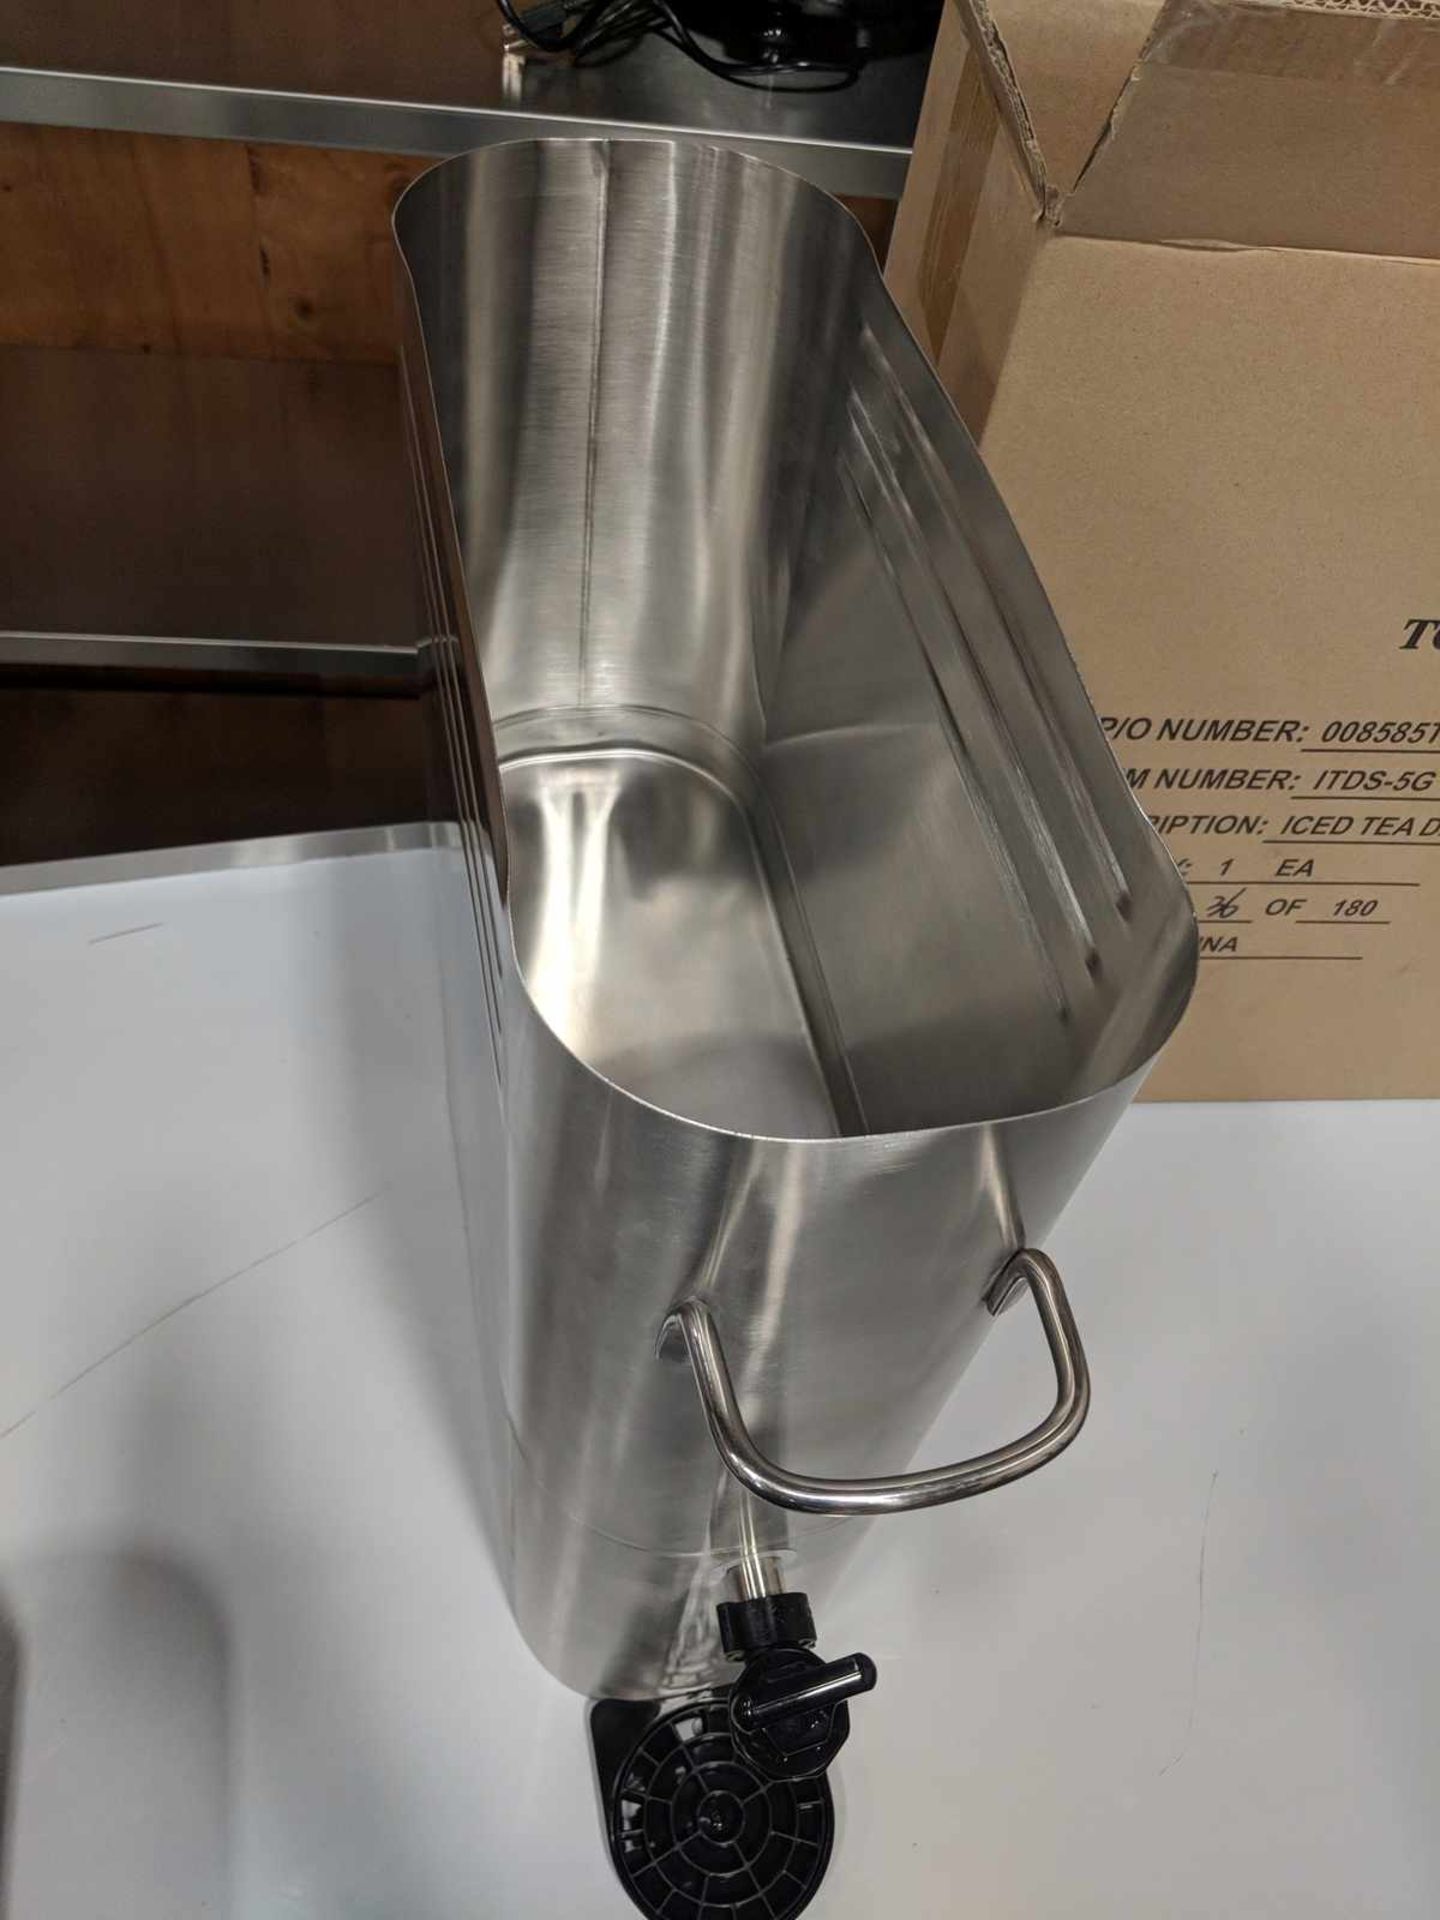 5 Gallon Space-Saver Iced Tea Dispenser - Image 2 of 3